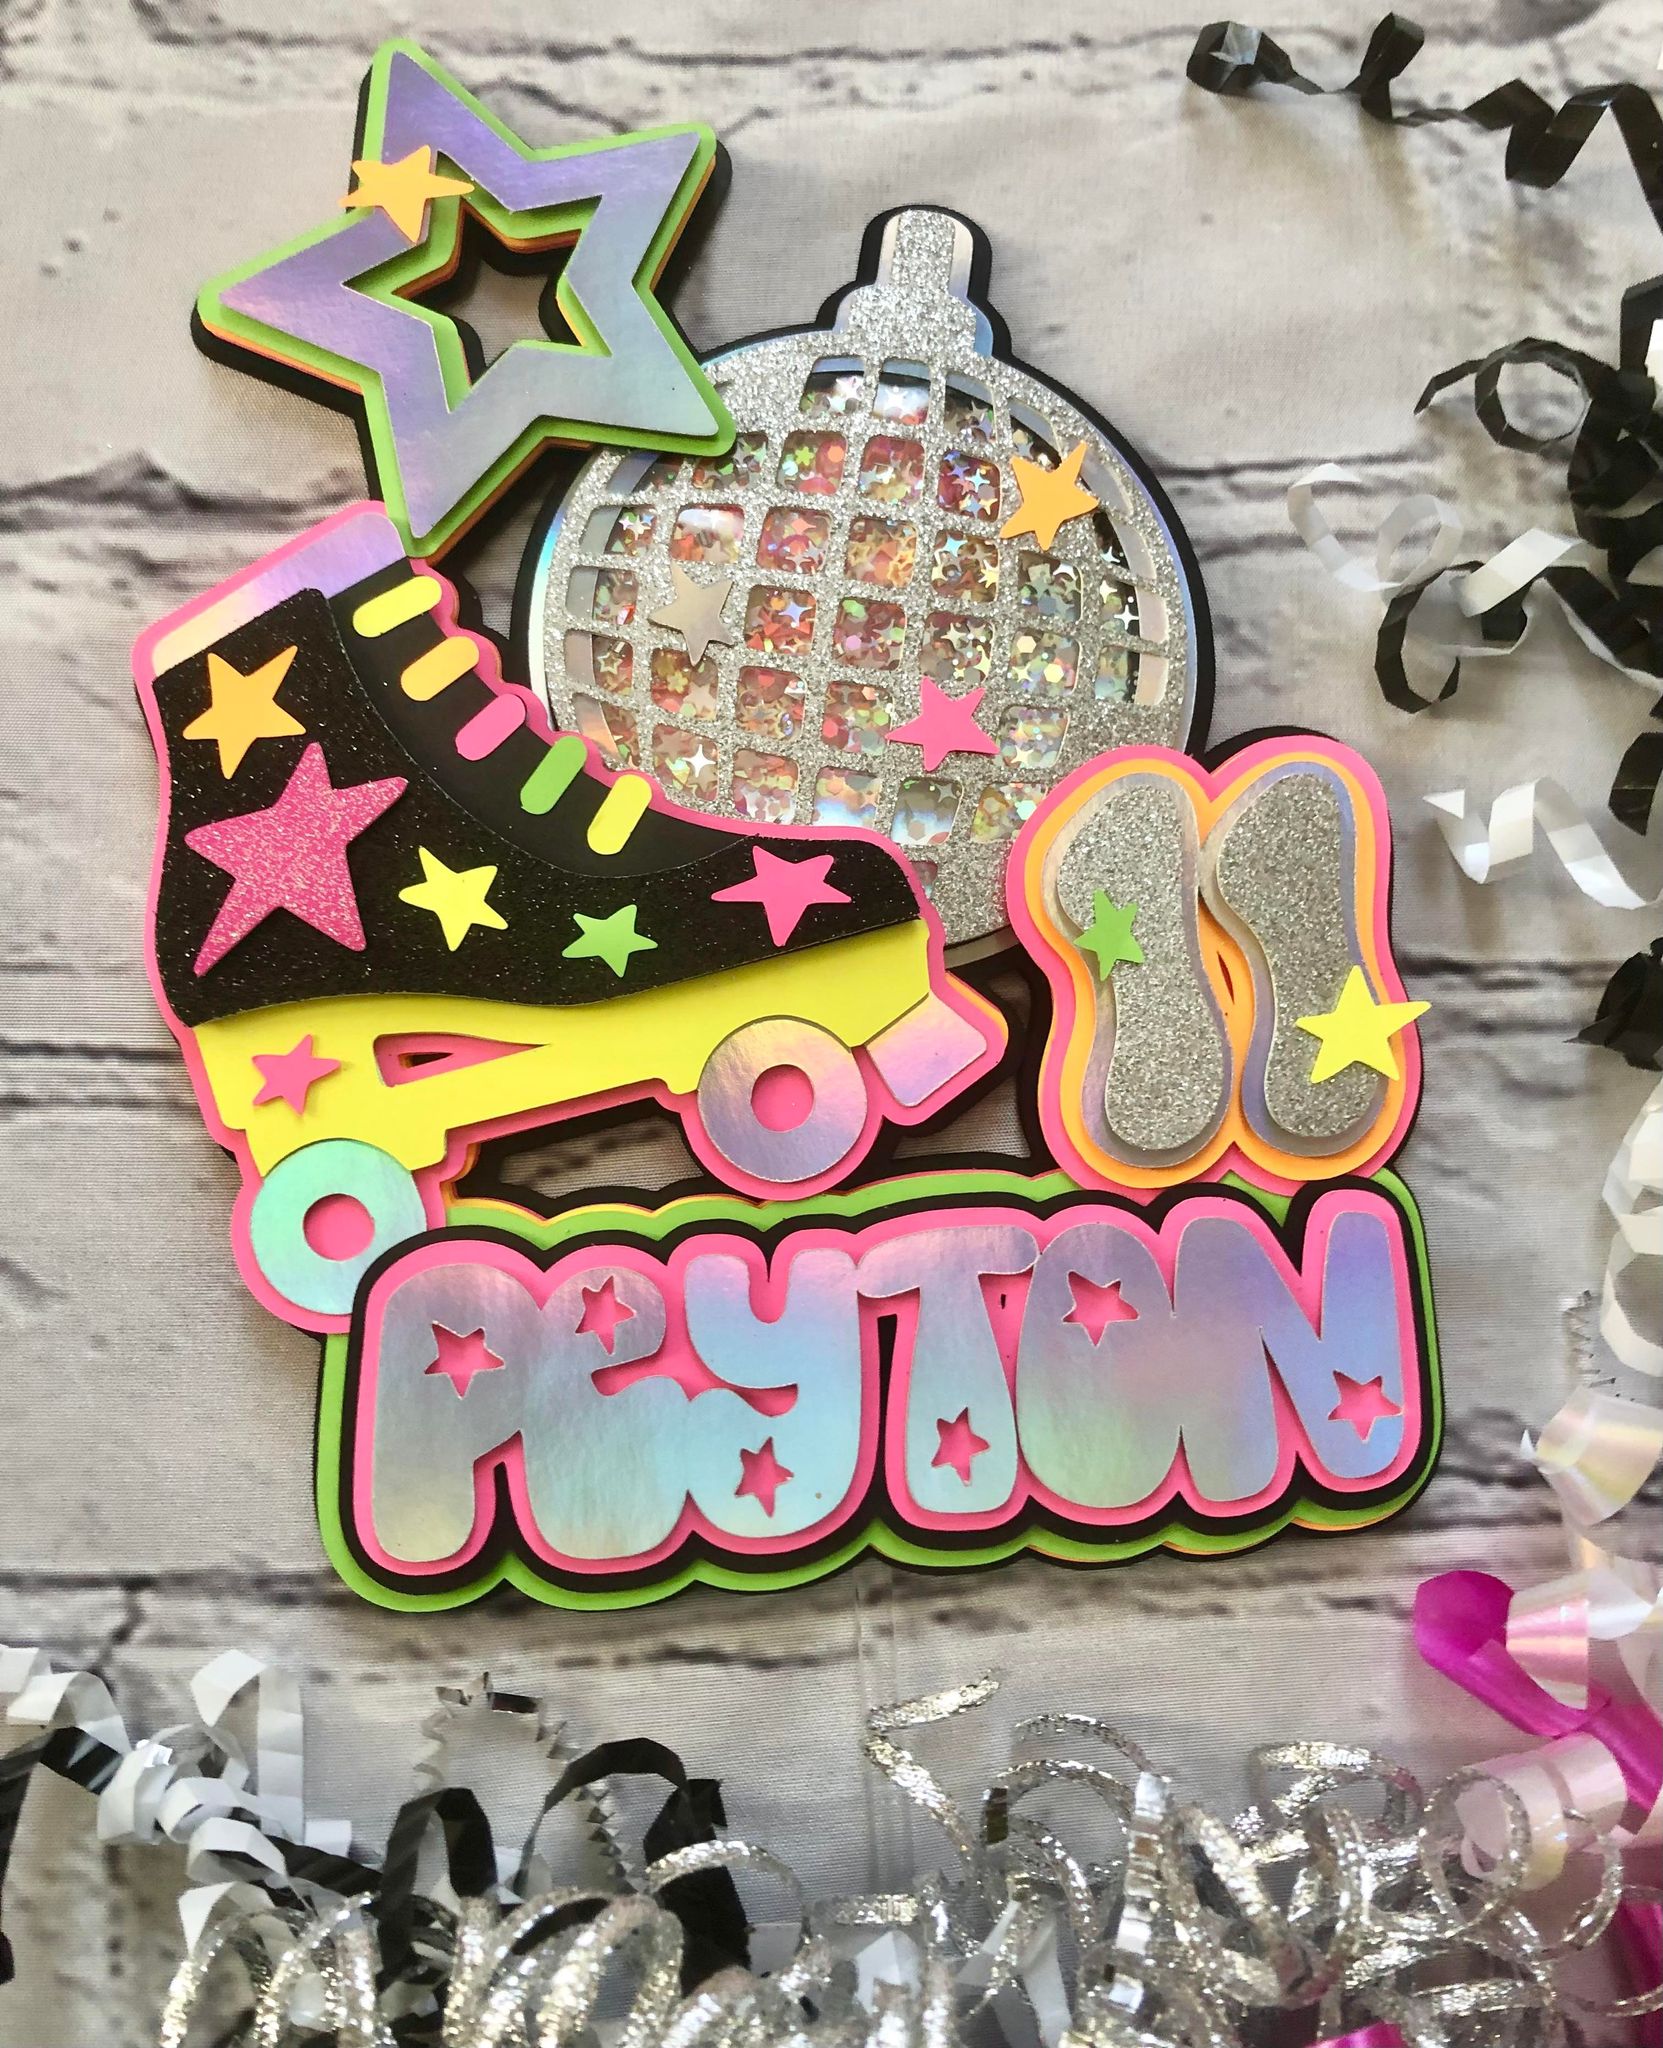 Beverly's Pastry Shop - Roller skating Cake! #bringingjoyonecakeatatime  #rollerskating #cake #cakes #cakestagram #instacake #quarantine | Facebook